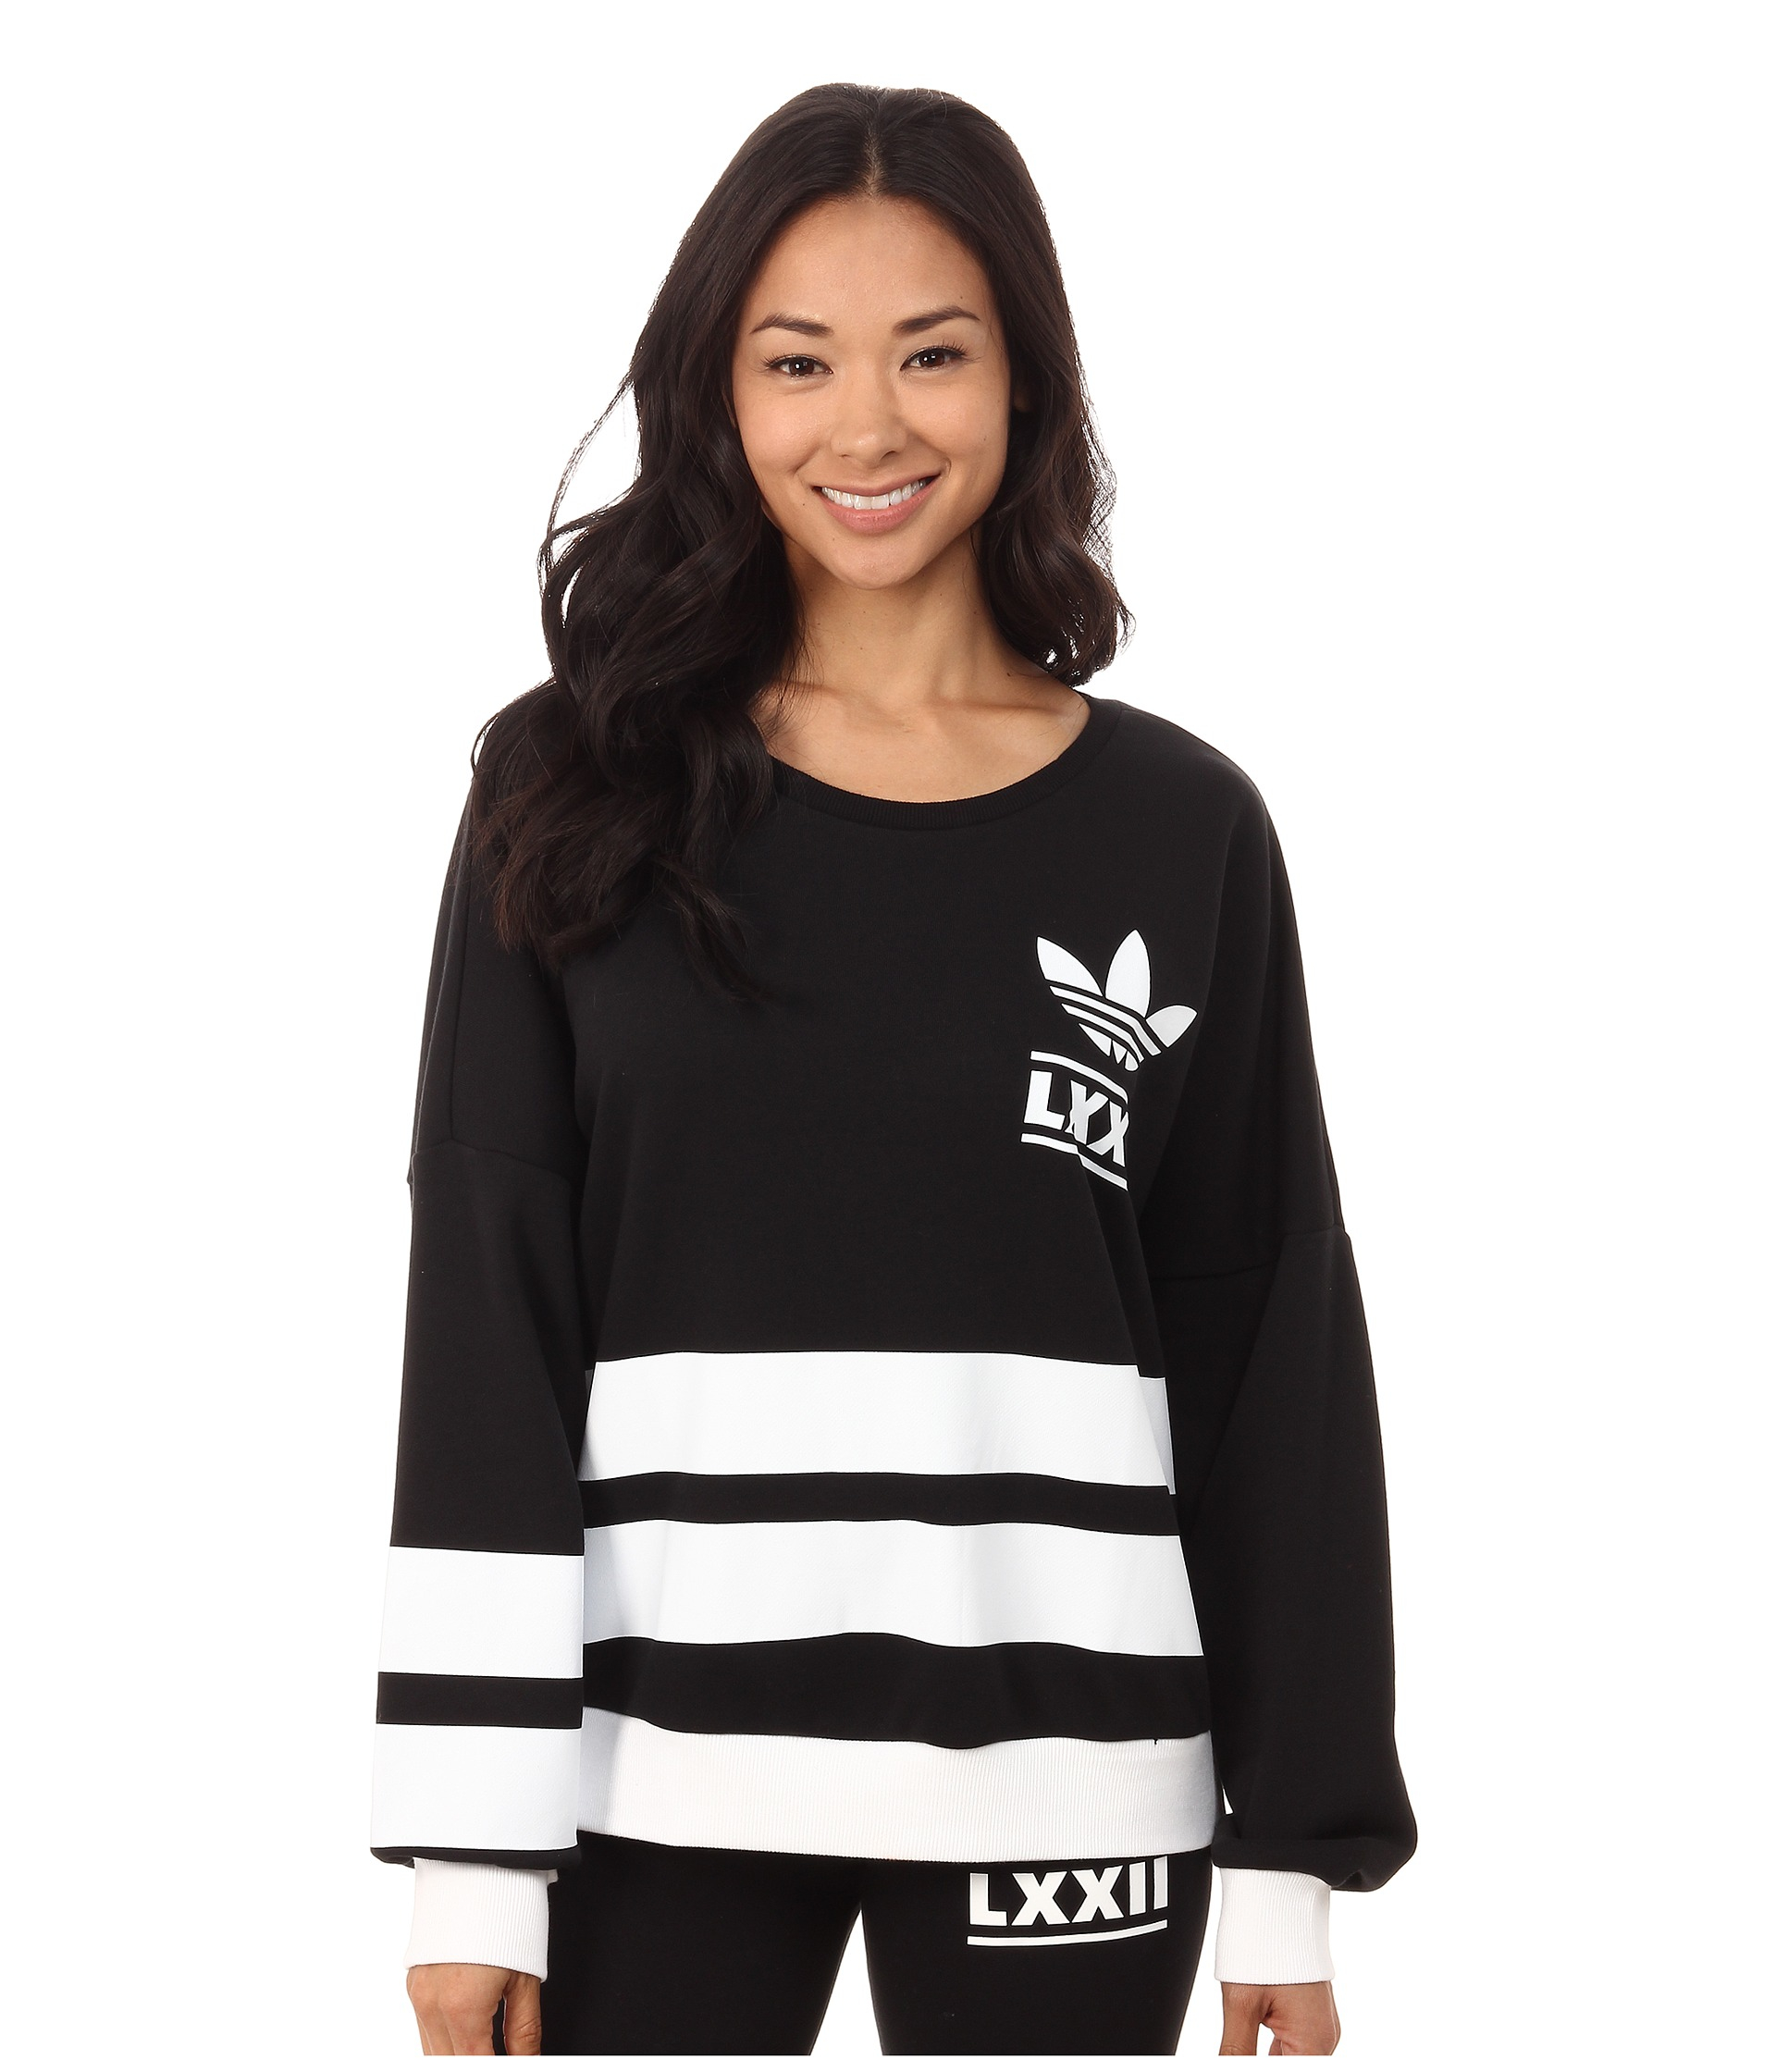 adidas Originals Berlin Logo 3-stripes Crew Sweater in Black/White